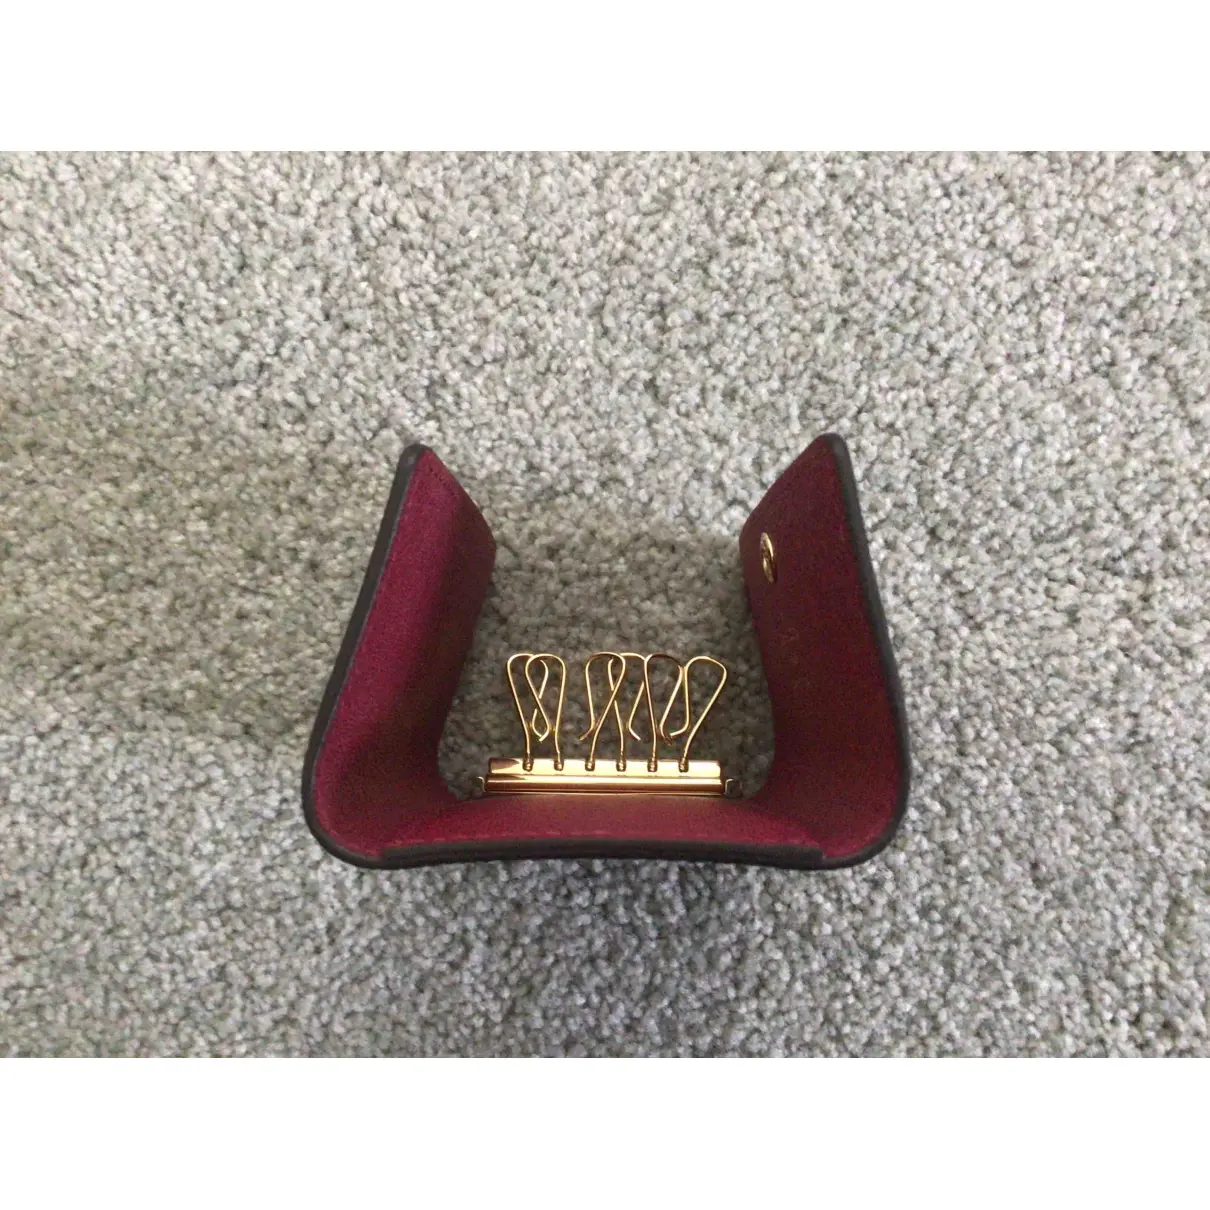 Cloth key ring Louis Vuitton